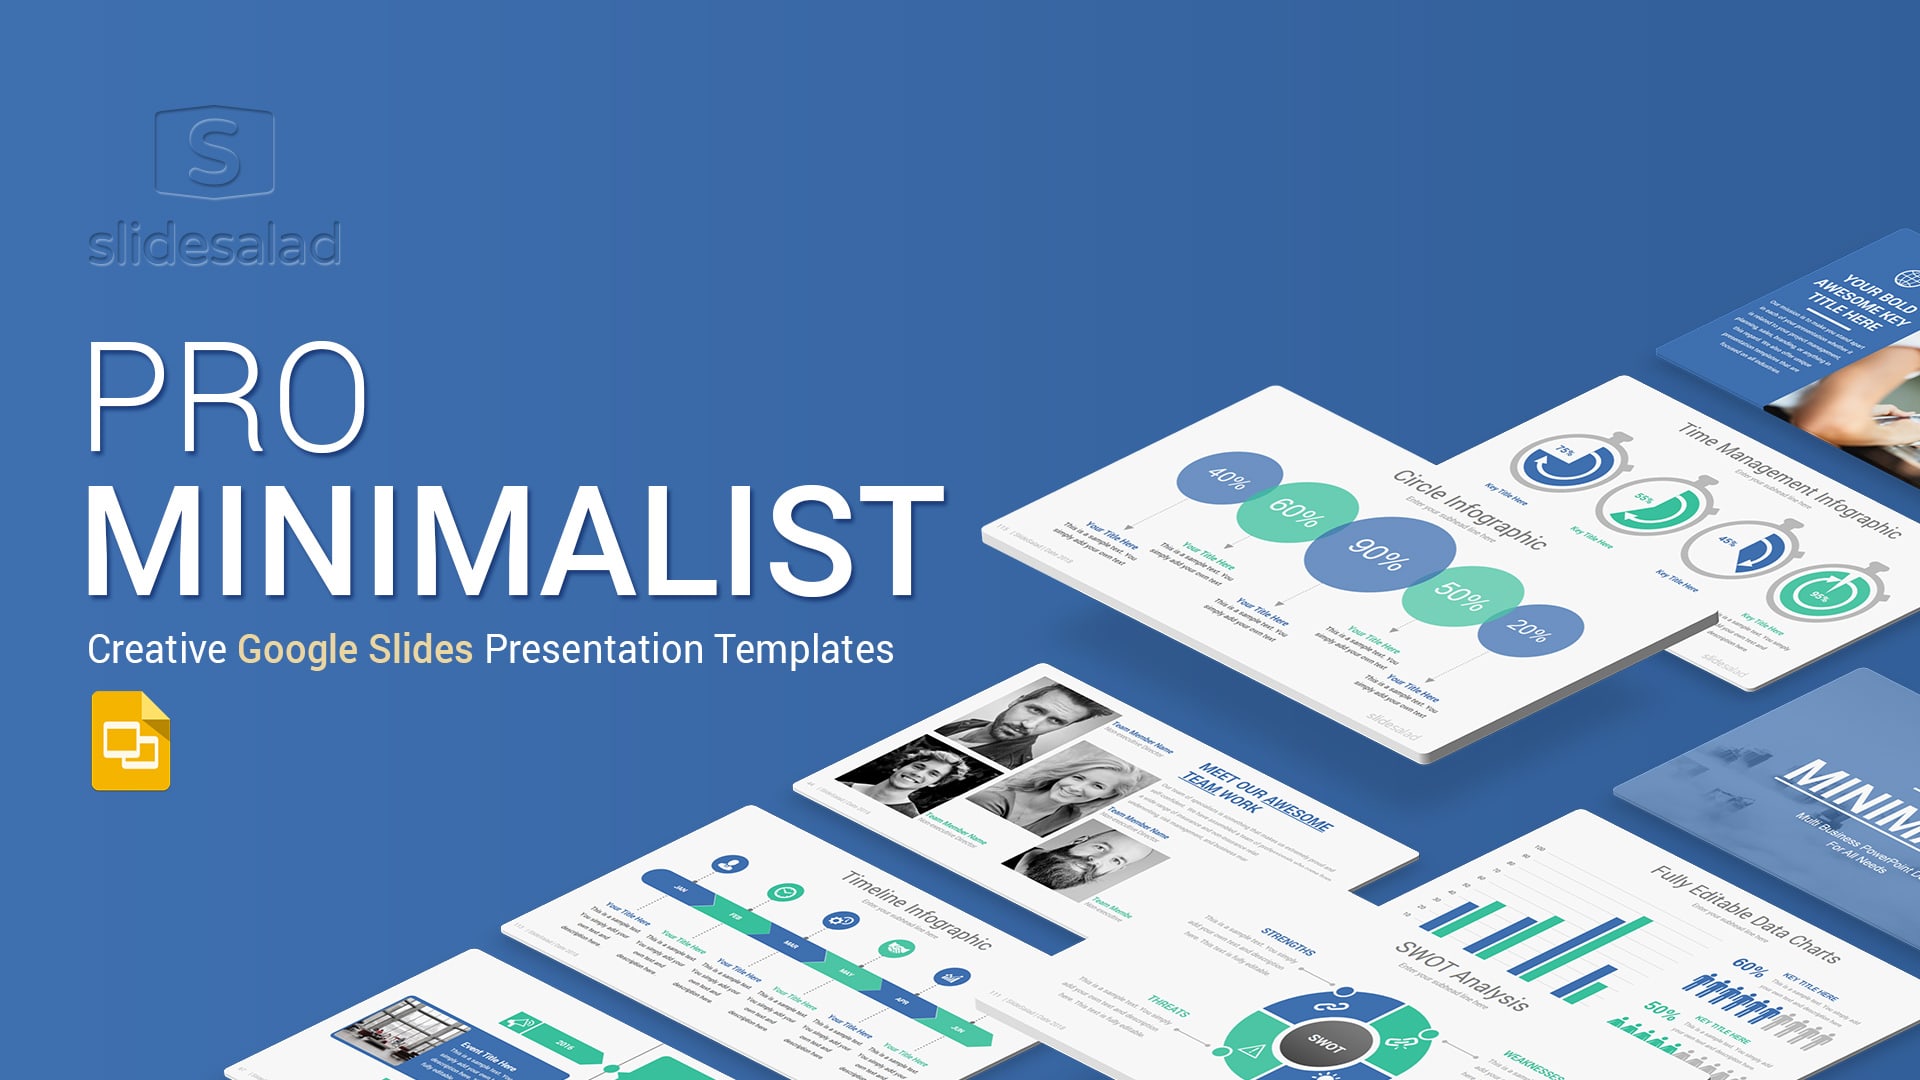 Pro Minimalist Google Slides Template Designs - Professional Google Slides Themes for Business Presentations